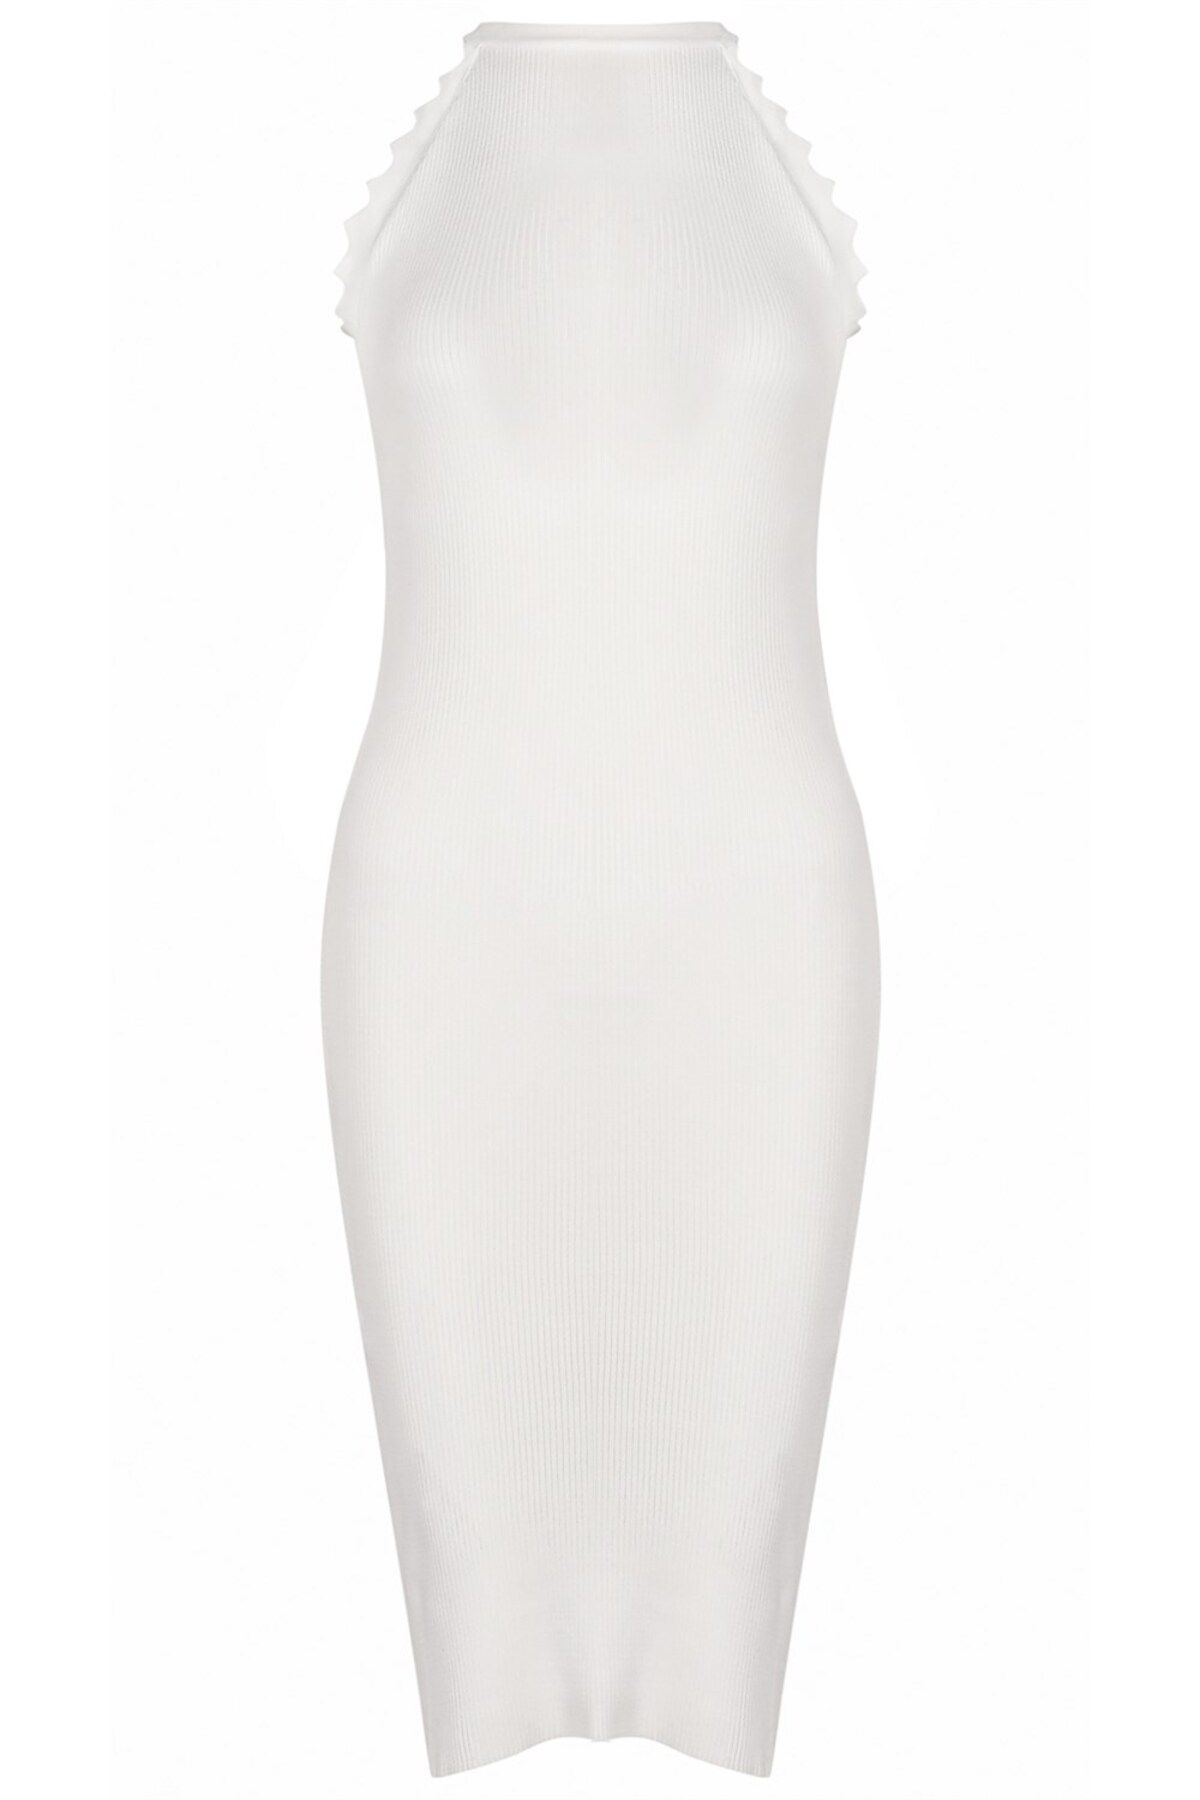 Dewberry Z2012 Elbise-beyaz Optik